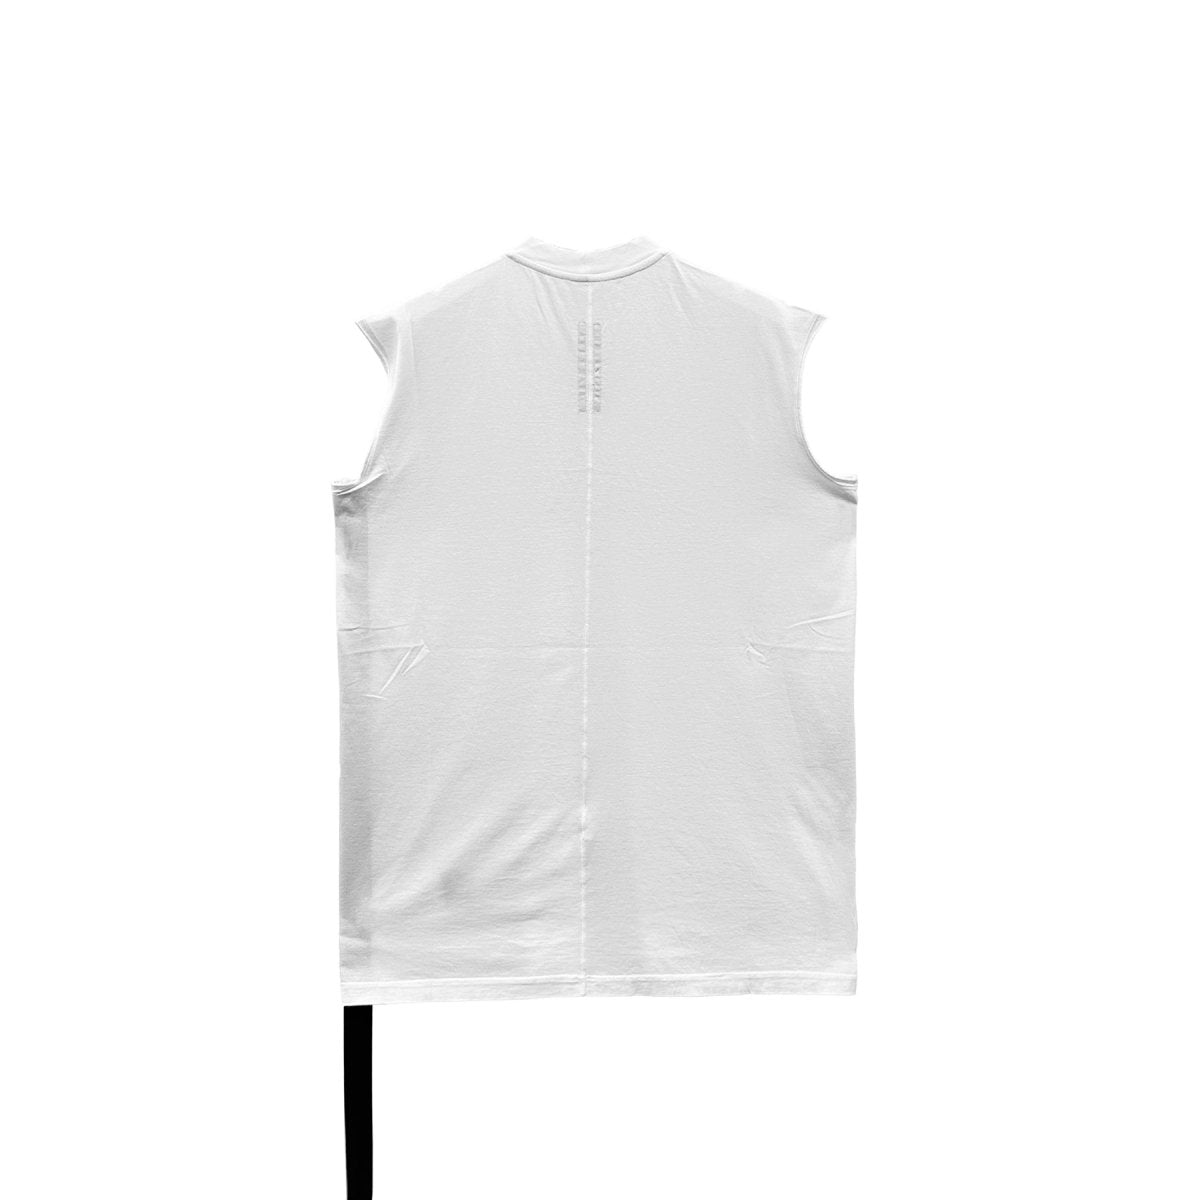 RICK OWENS DRKSHDW White T-shirt 'TARP' - SHENGLI ROAD MARKET